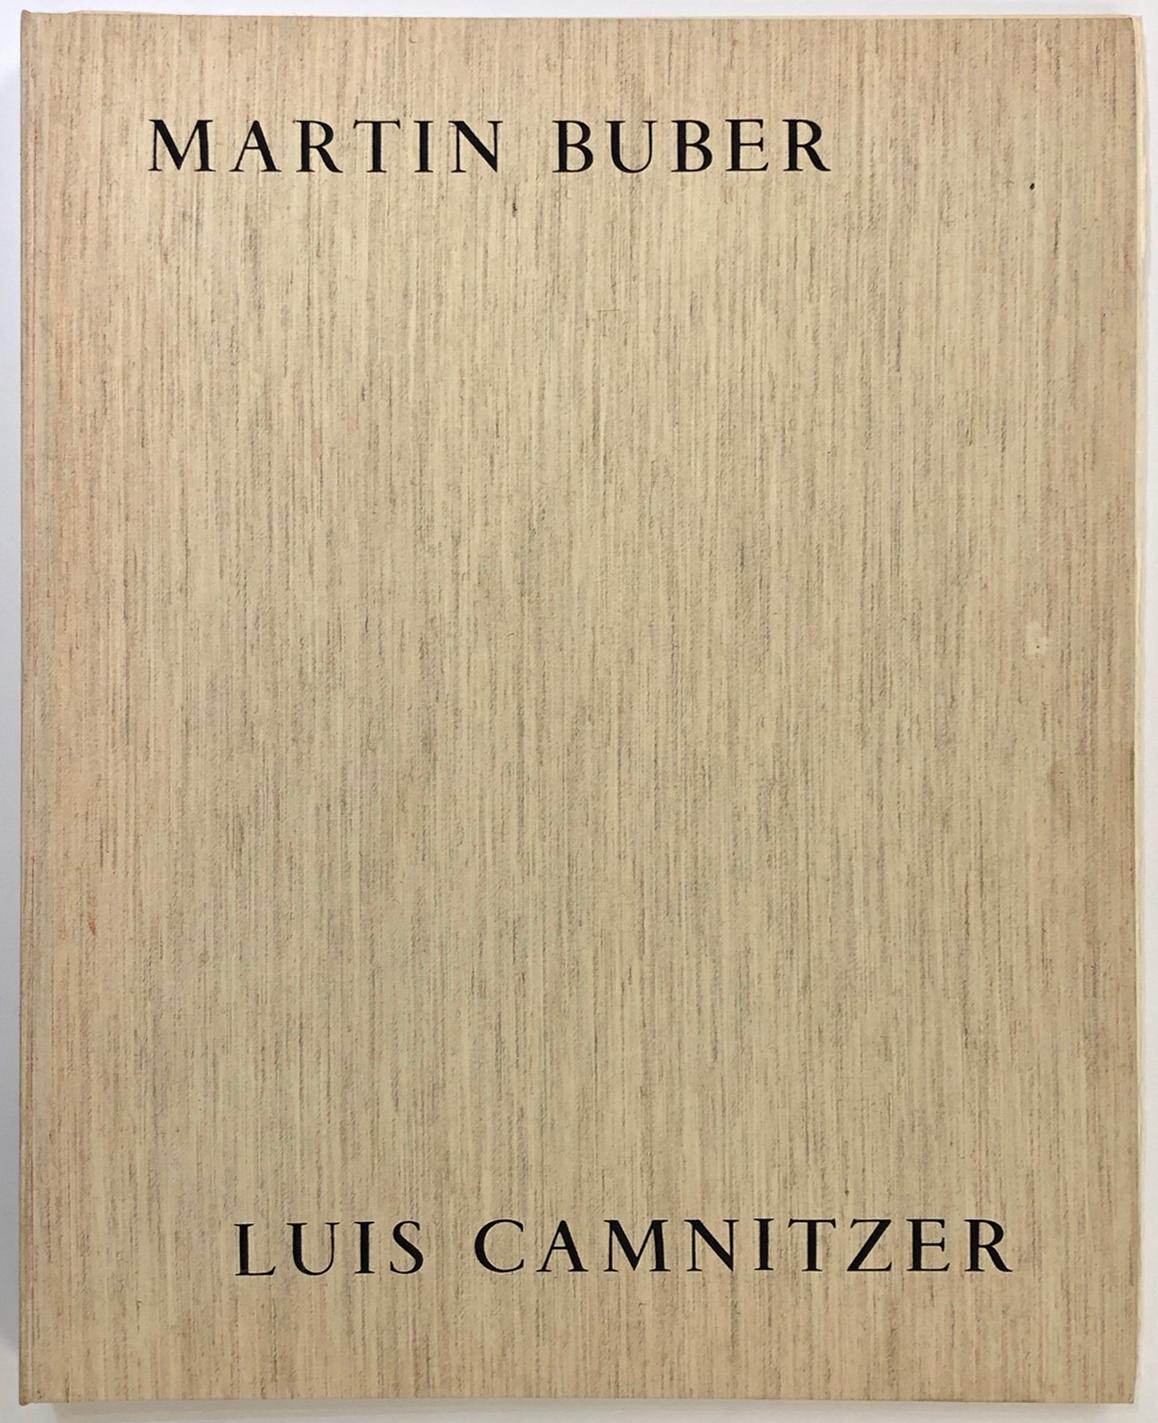 LUIS CAMNITZER ILLUSTRATES MARTIN BUBER PORTFOLIO - Print by Luis Camnitzer